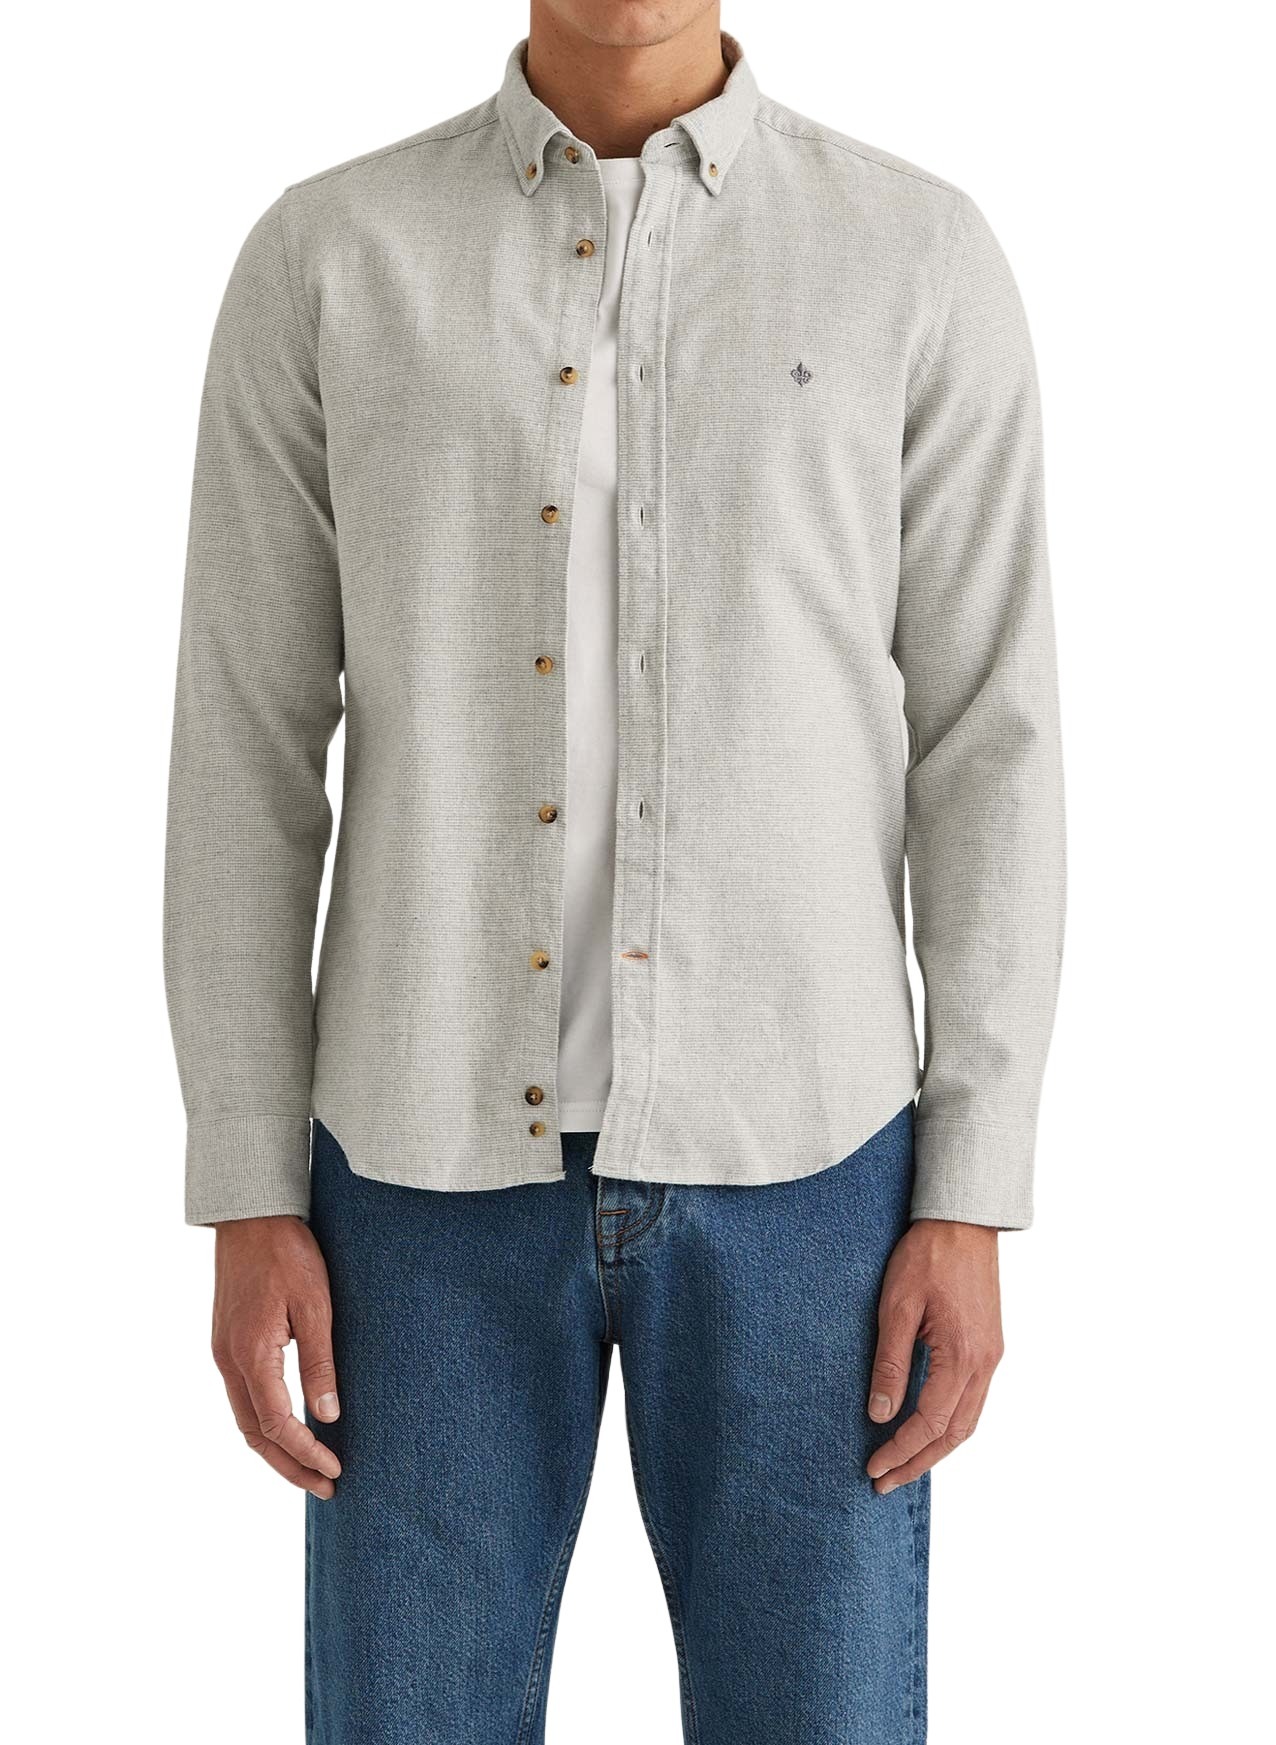 801639-flannel-check-shirt-slim-fit-91-grey-1